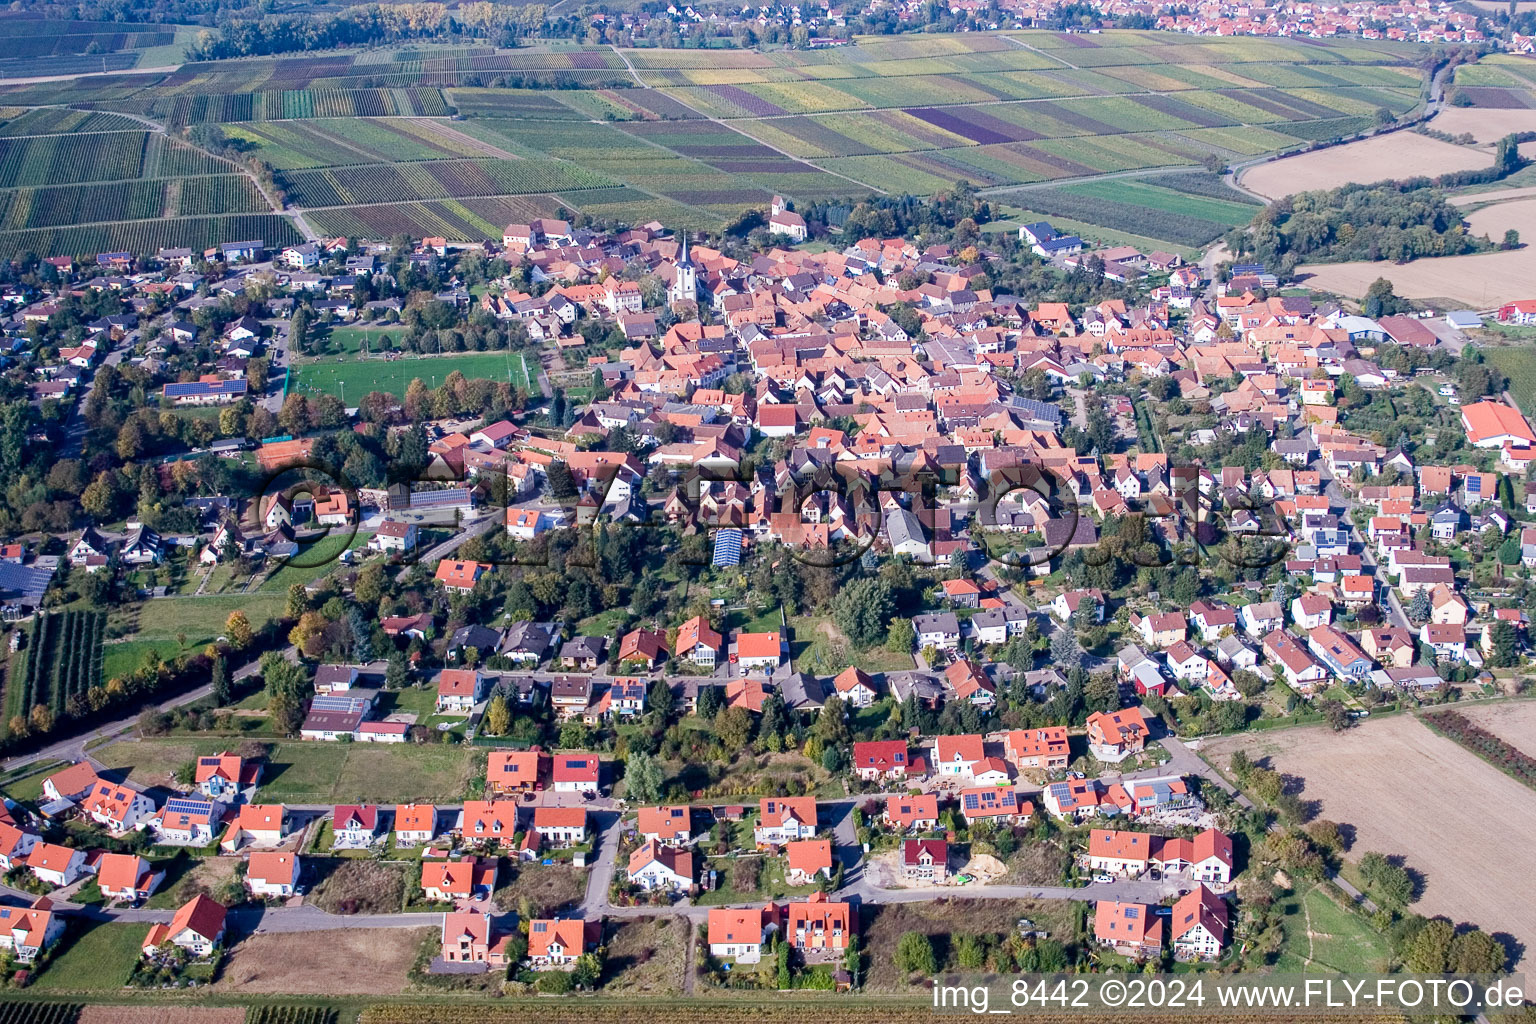 Aerial view of Village view in the district Moerzheim in Landau in der Pfalz in the state Rhineland-Palatinate, Germany